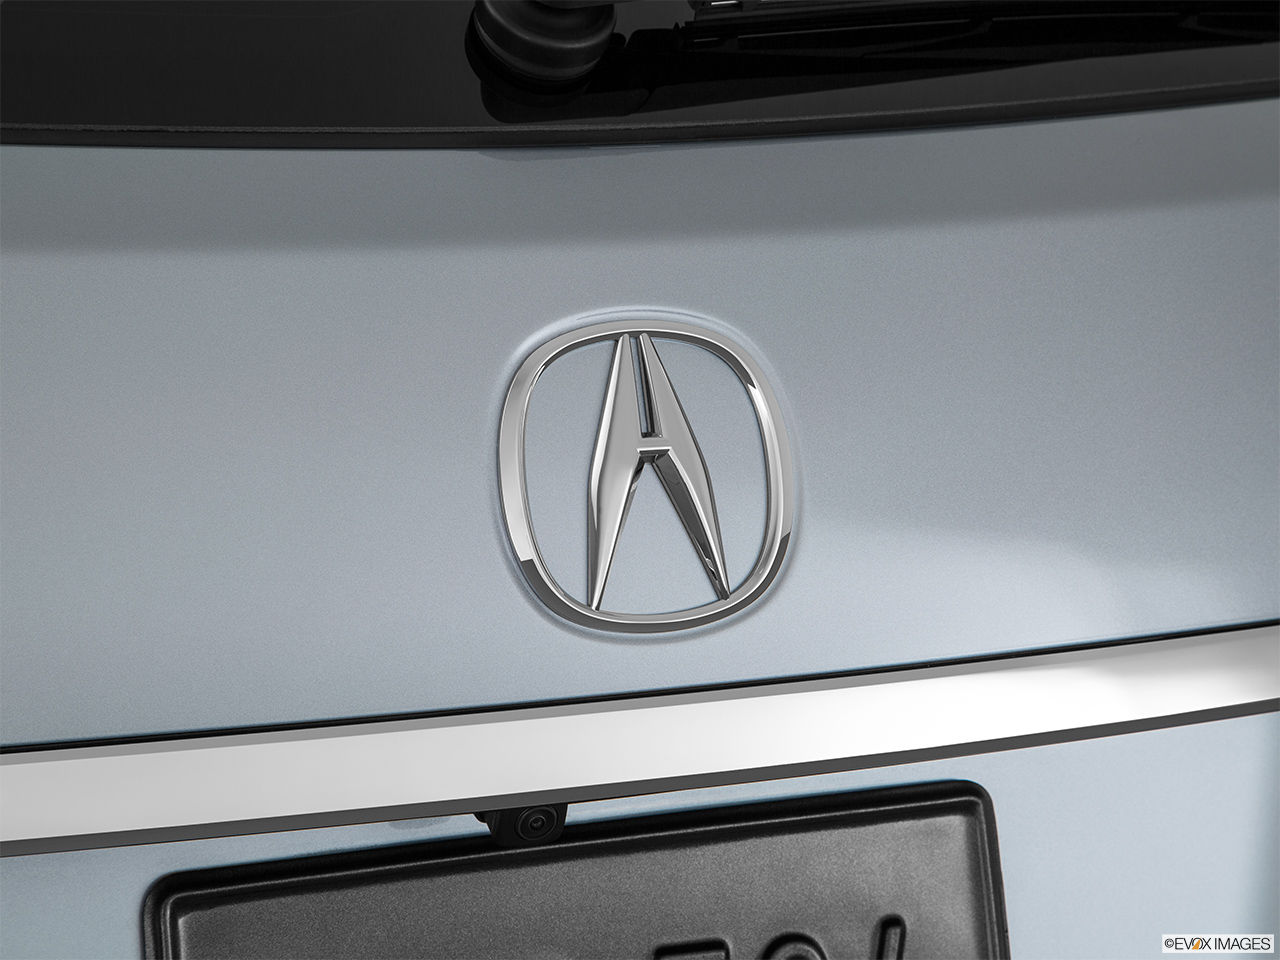 2017 Acura RDX AWD Rear manufacture badge/emblem 